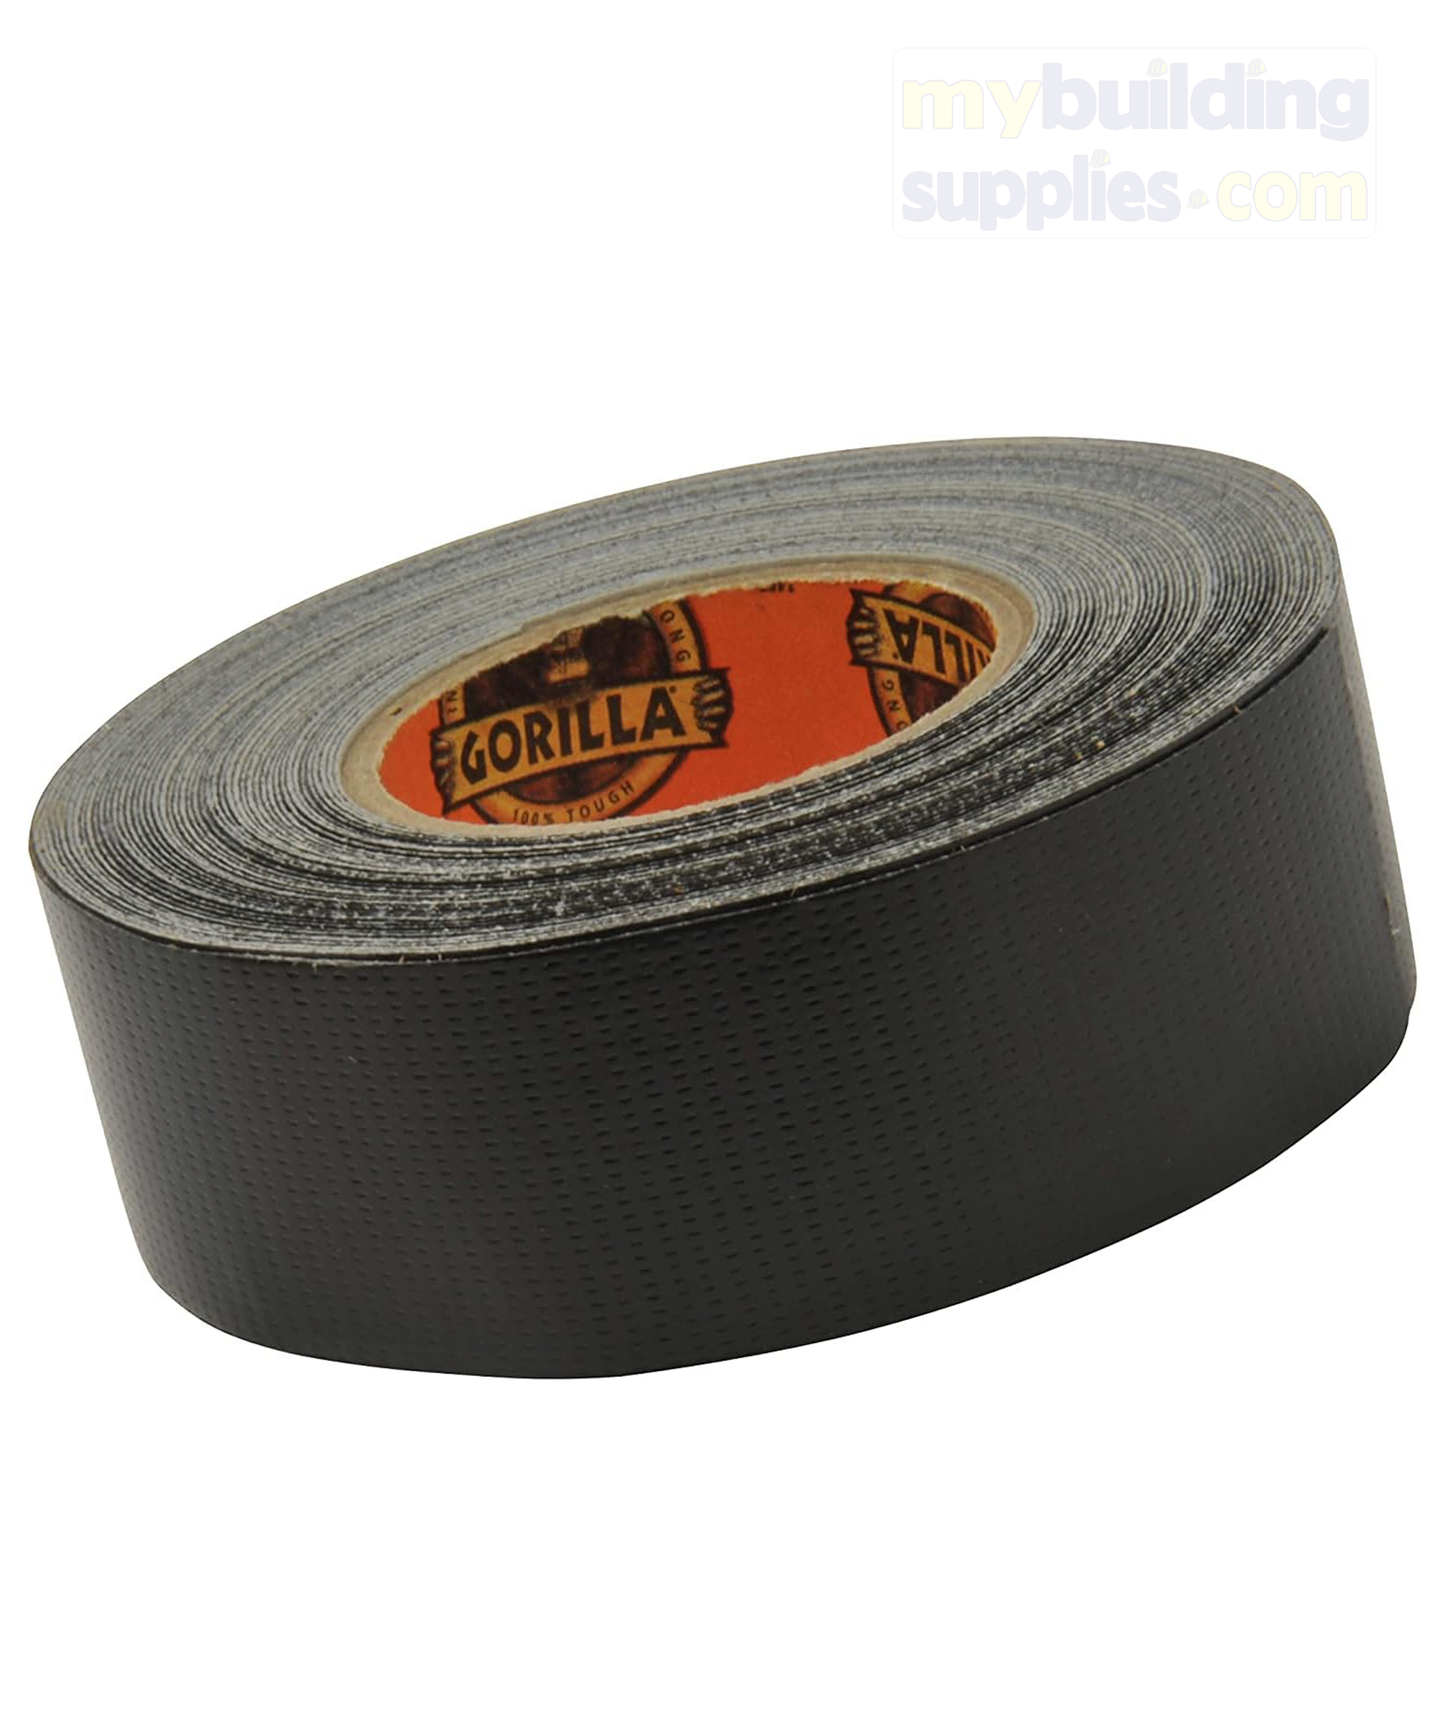 Gorilla Tape Handy Roll Black 9m x 25mm - 3044401